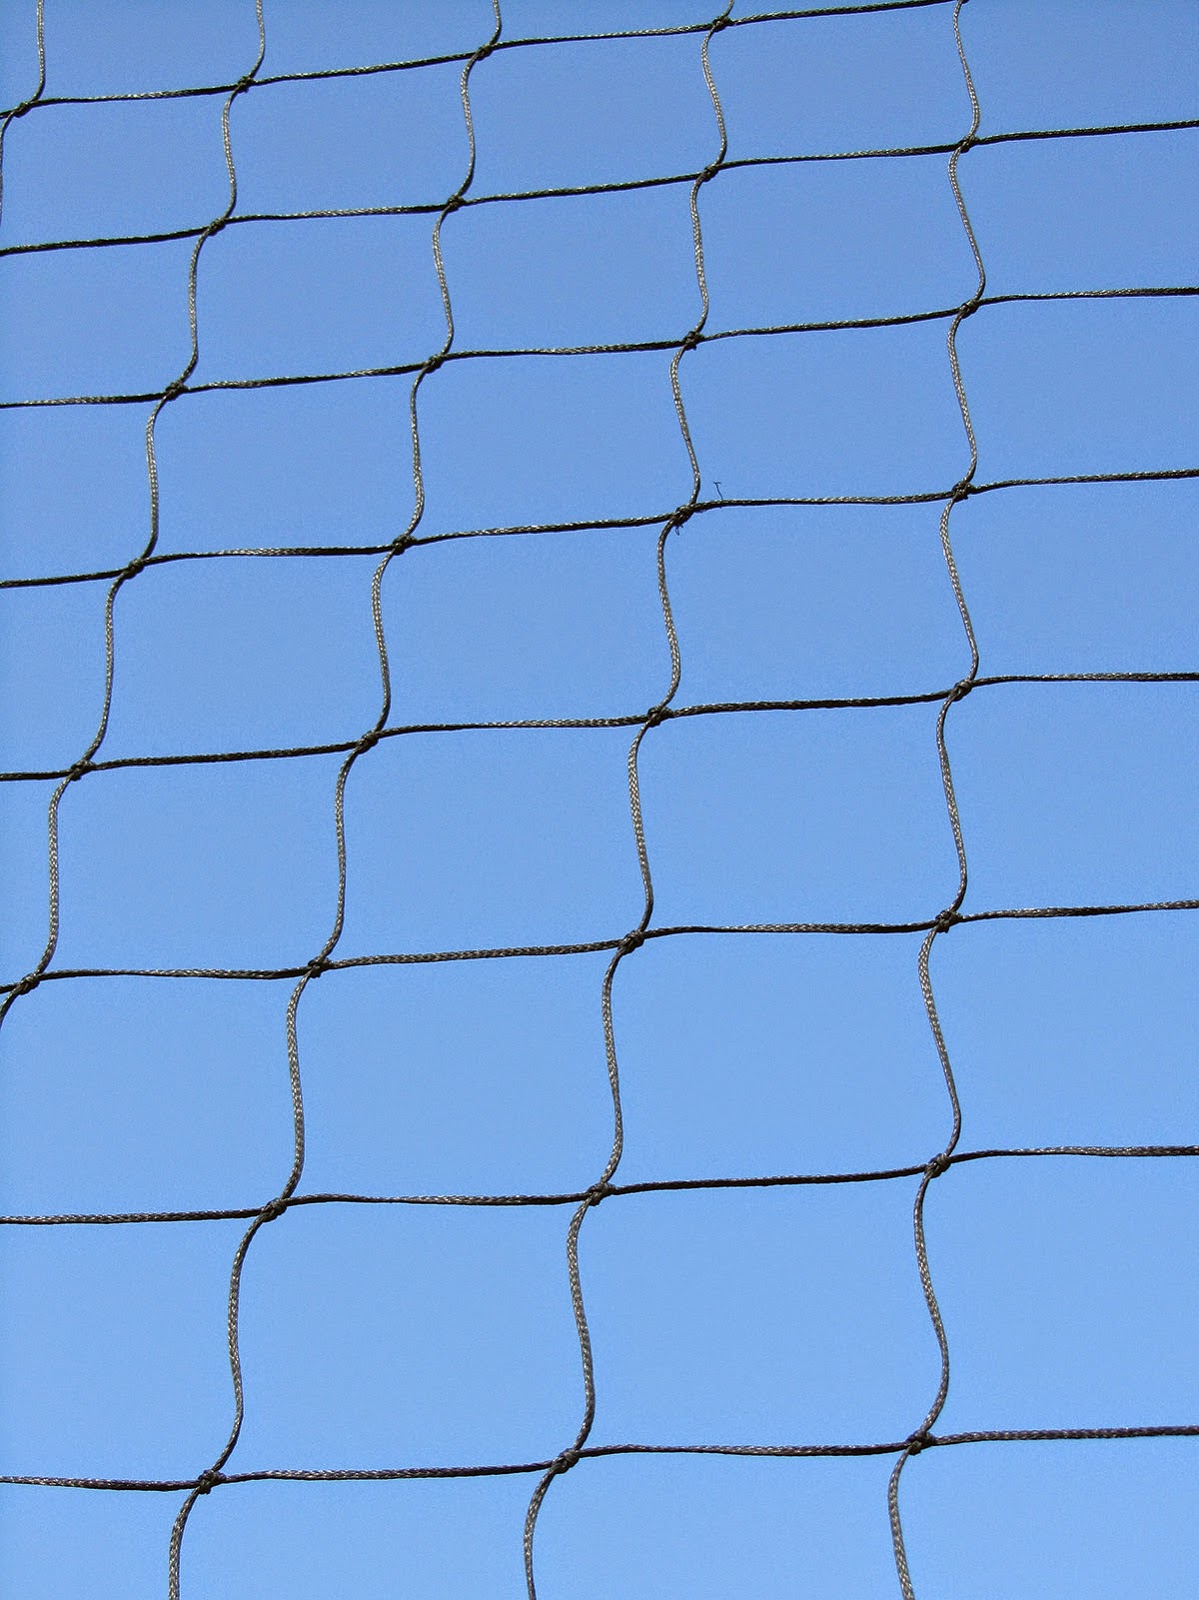 pattern of a soccer net against a blue sky